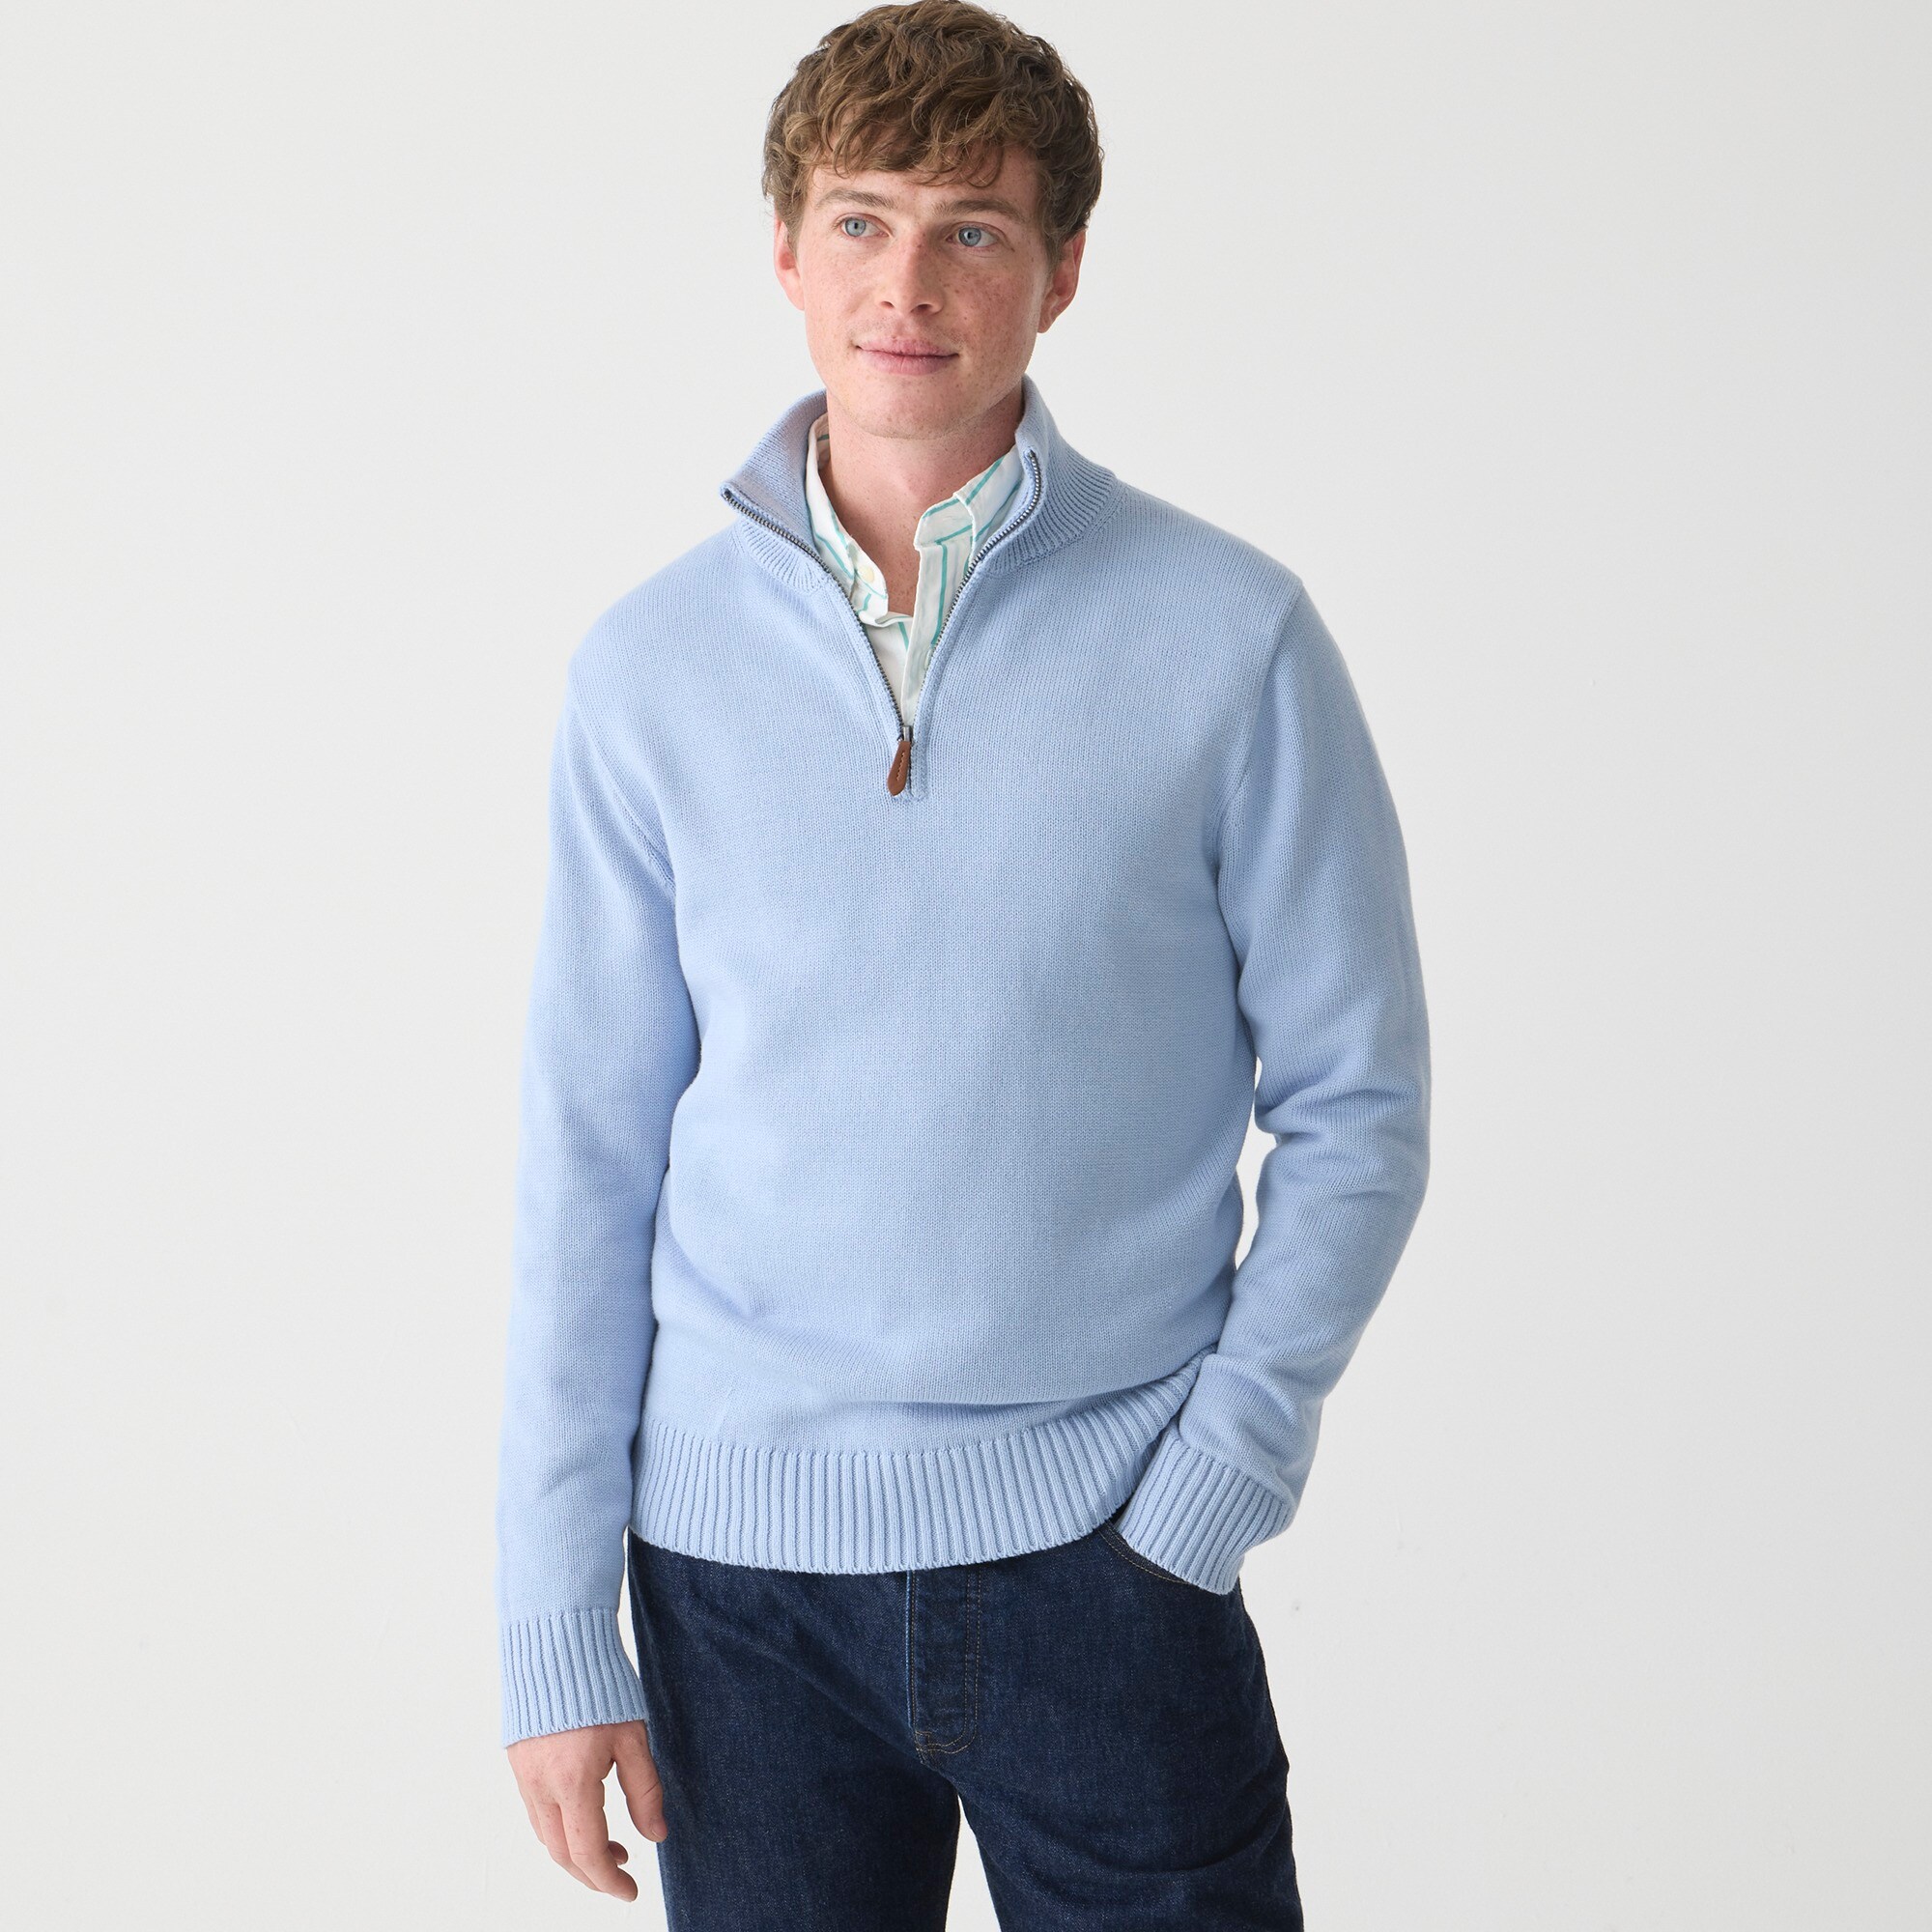 J.Crew: Cotton Sweater In Striped Garter Stitch For Men